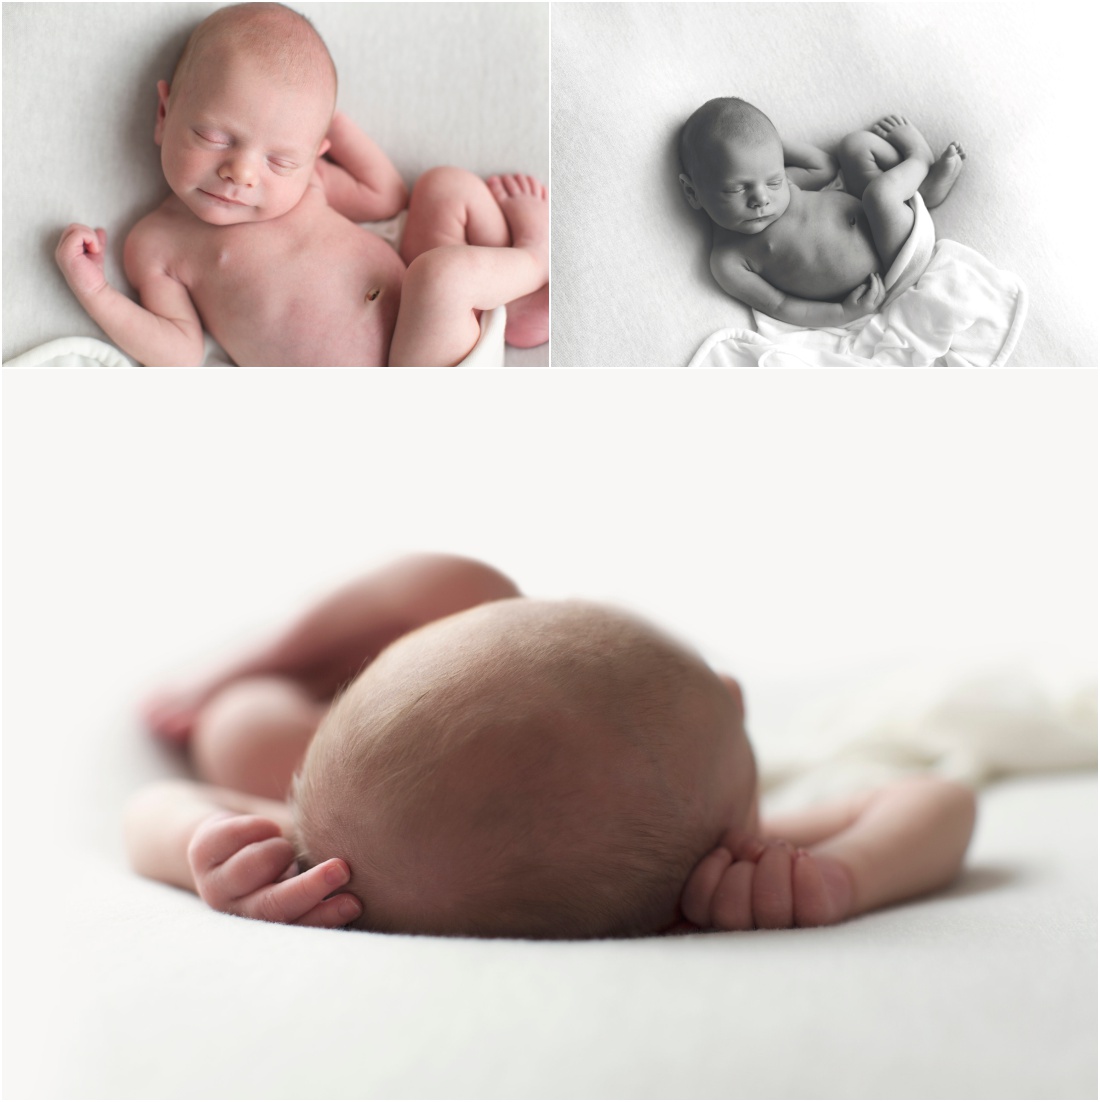 Lifestyle Newborn Photography